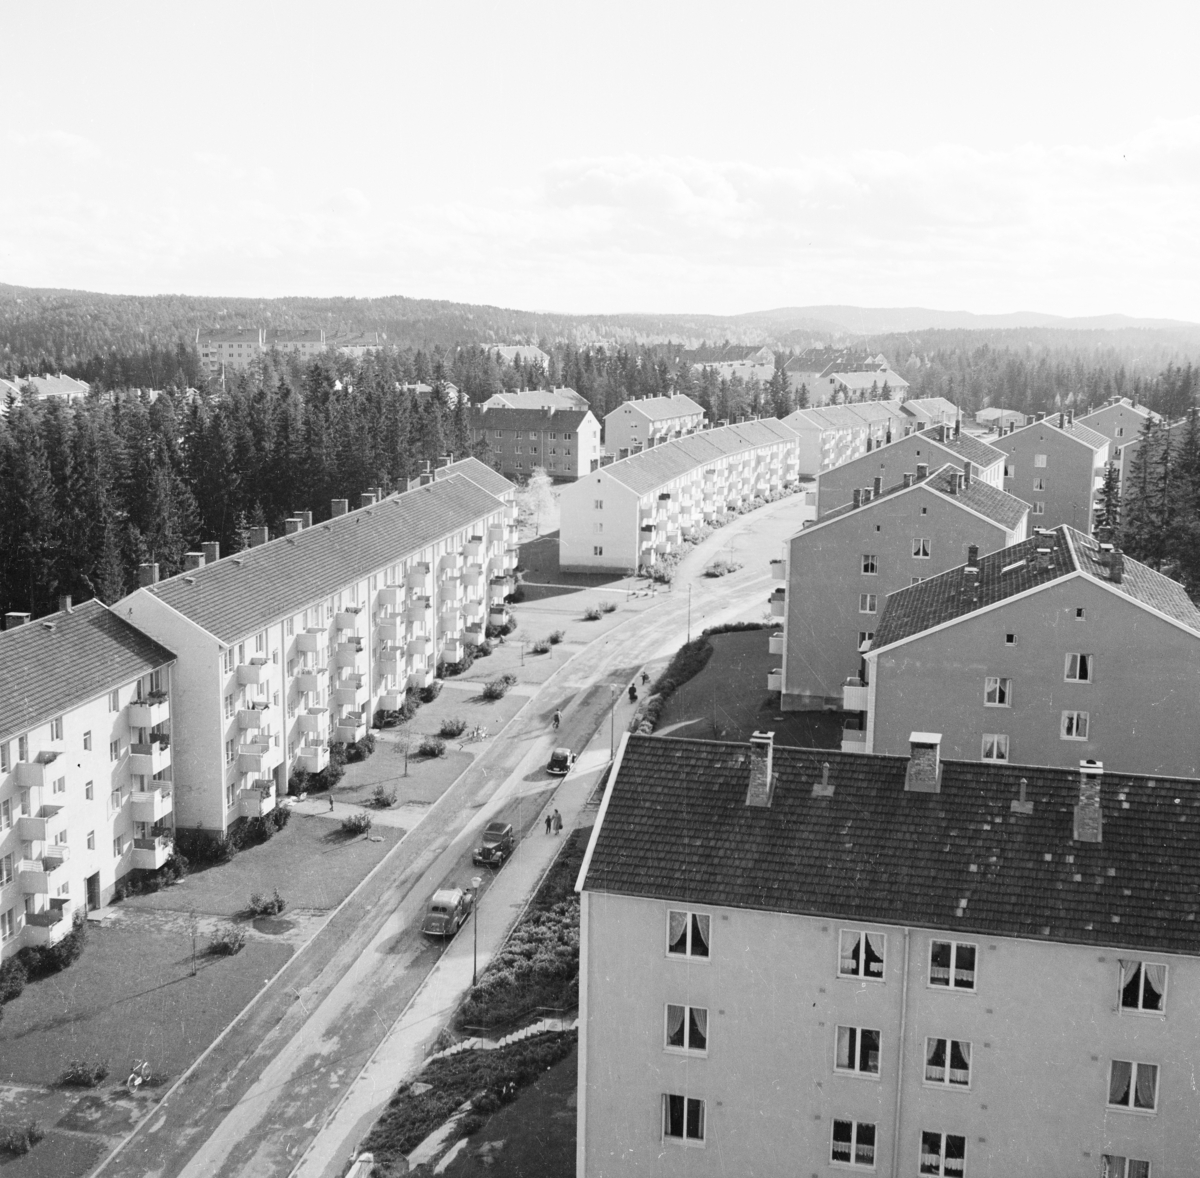 Lambertseter - Feltspatveien (mot sør) AK-PR-19, Perm "sept - des 58", neg 120.